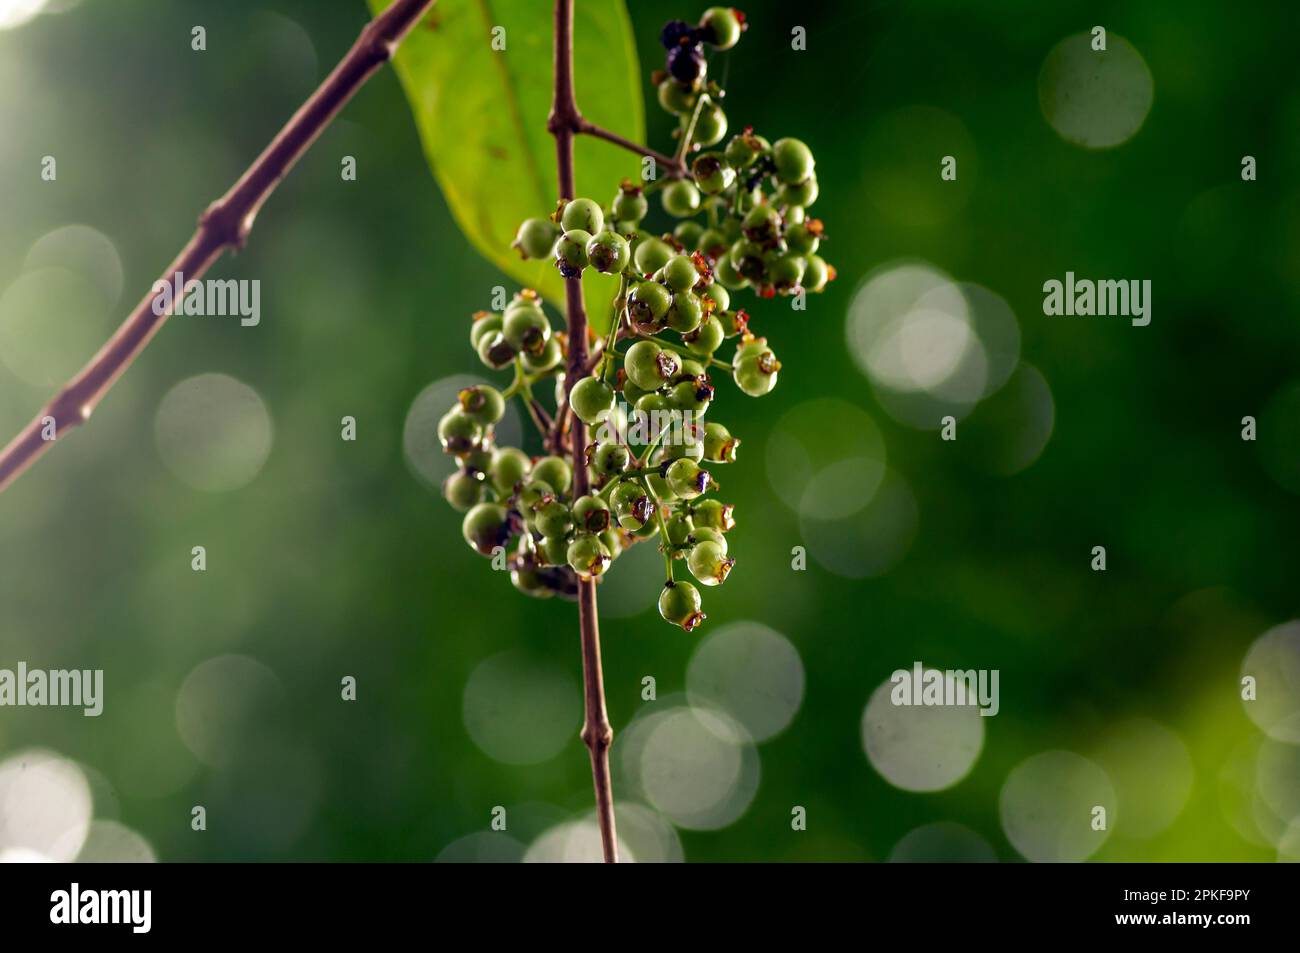 Indonesian bay leaf or daun salam, Syzygium polyanthum seeds, in shallow focus Stock Photo